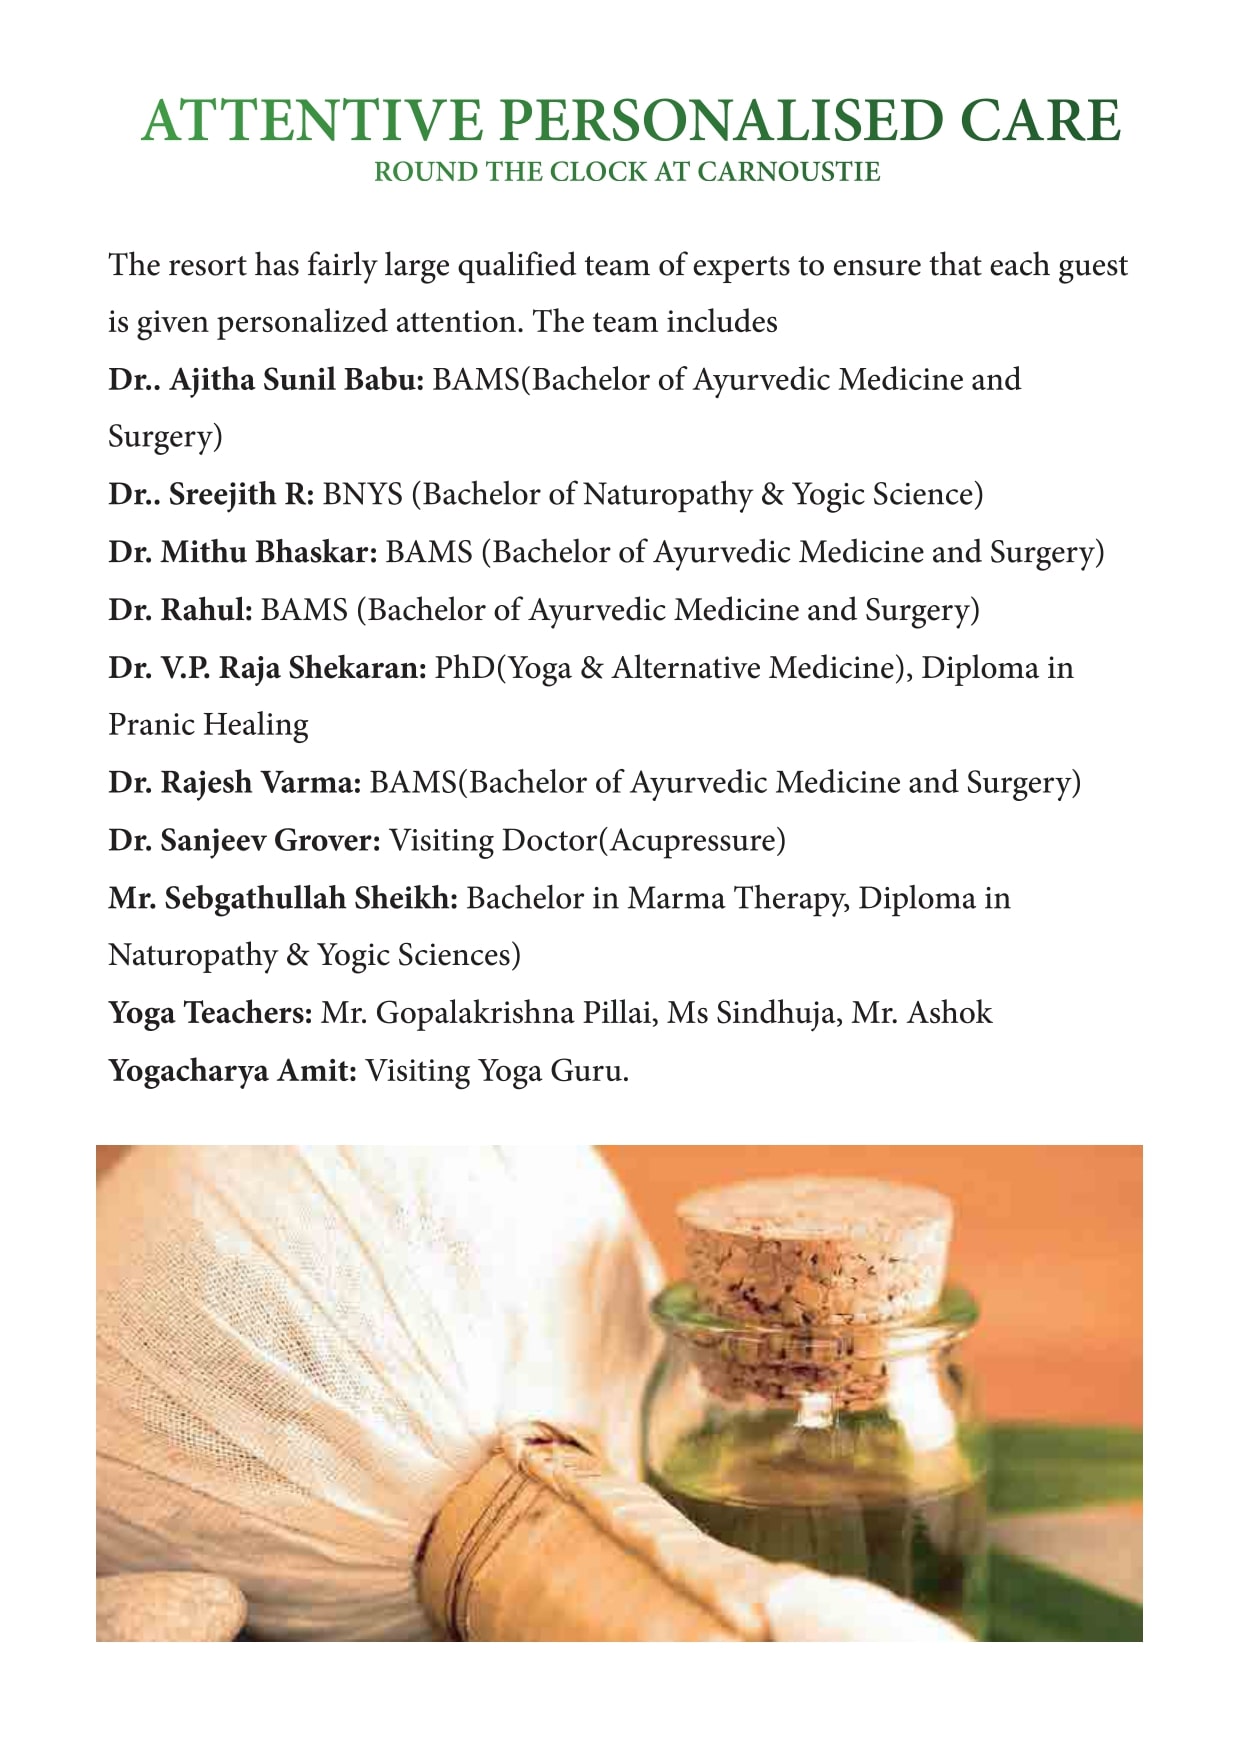 Best anti aging treatments in Kerala, India